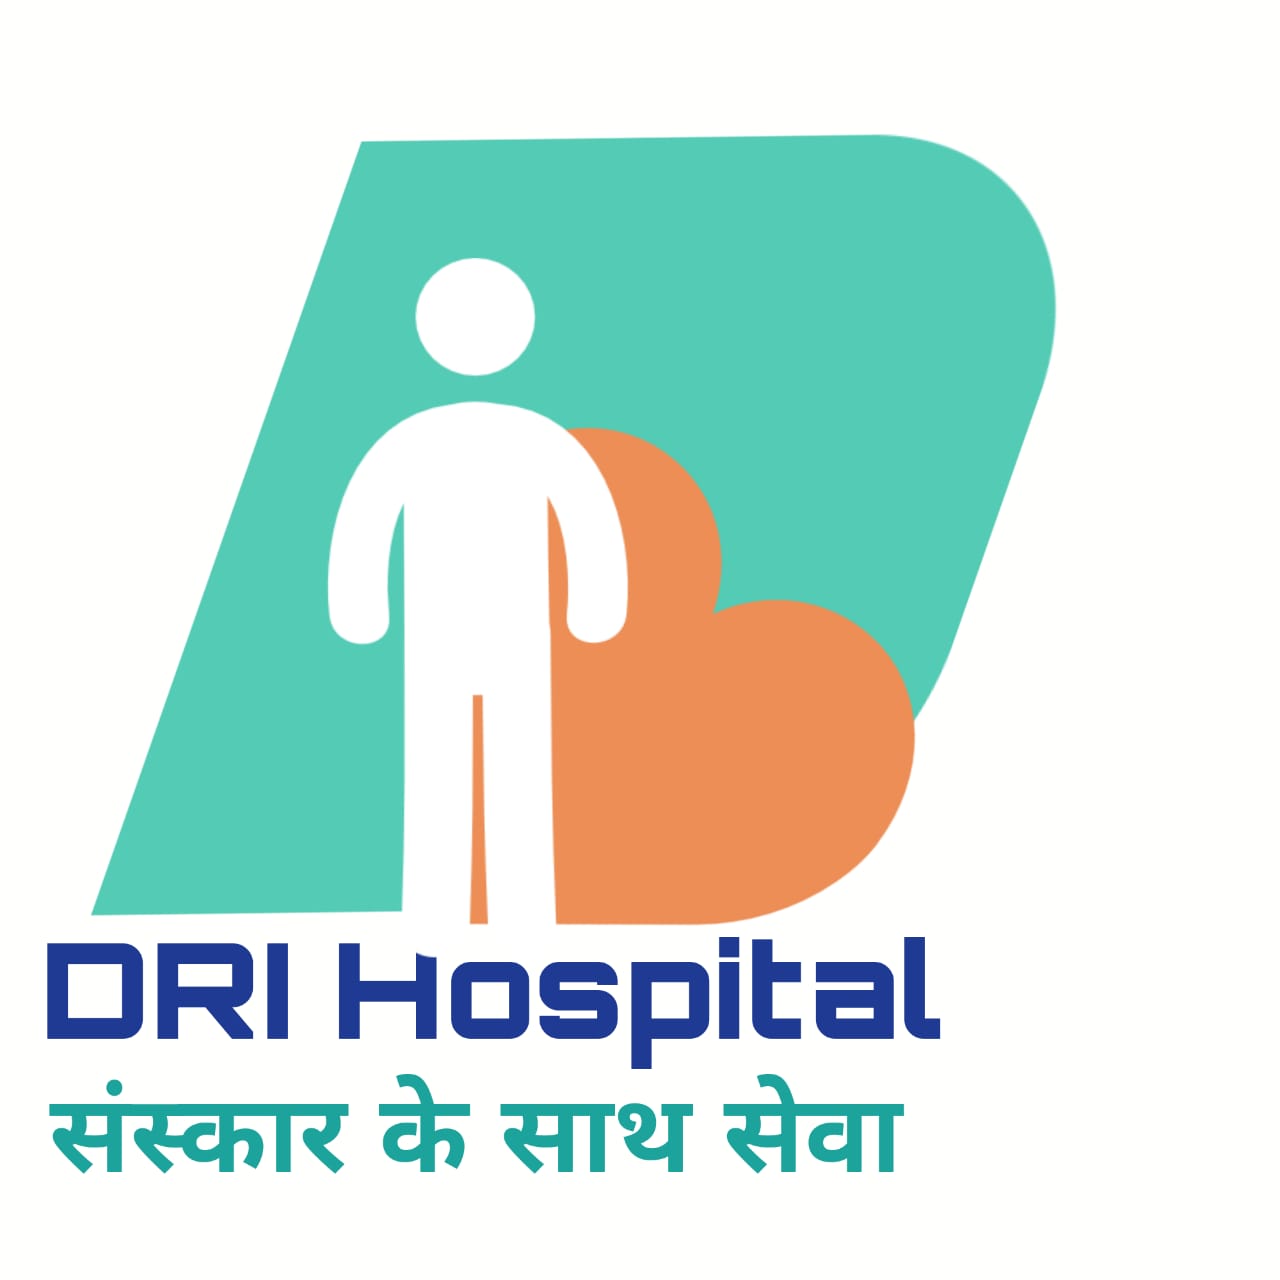 DRI Hospital